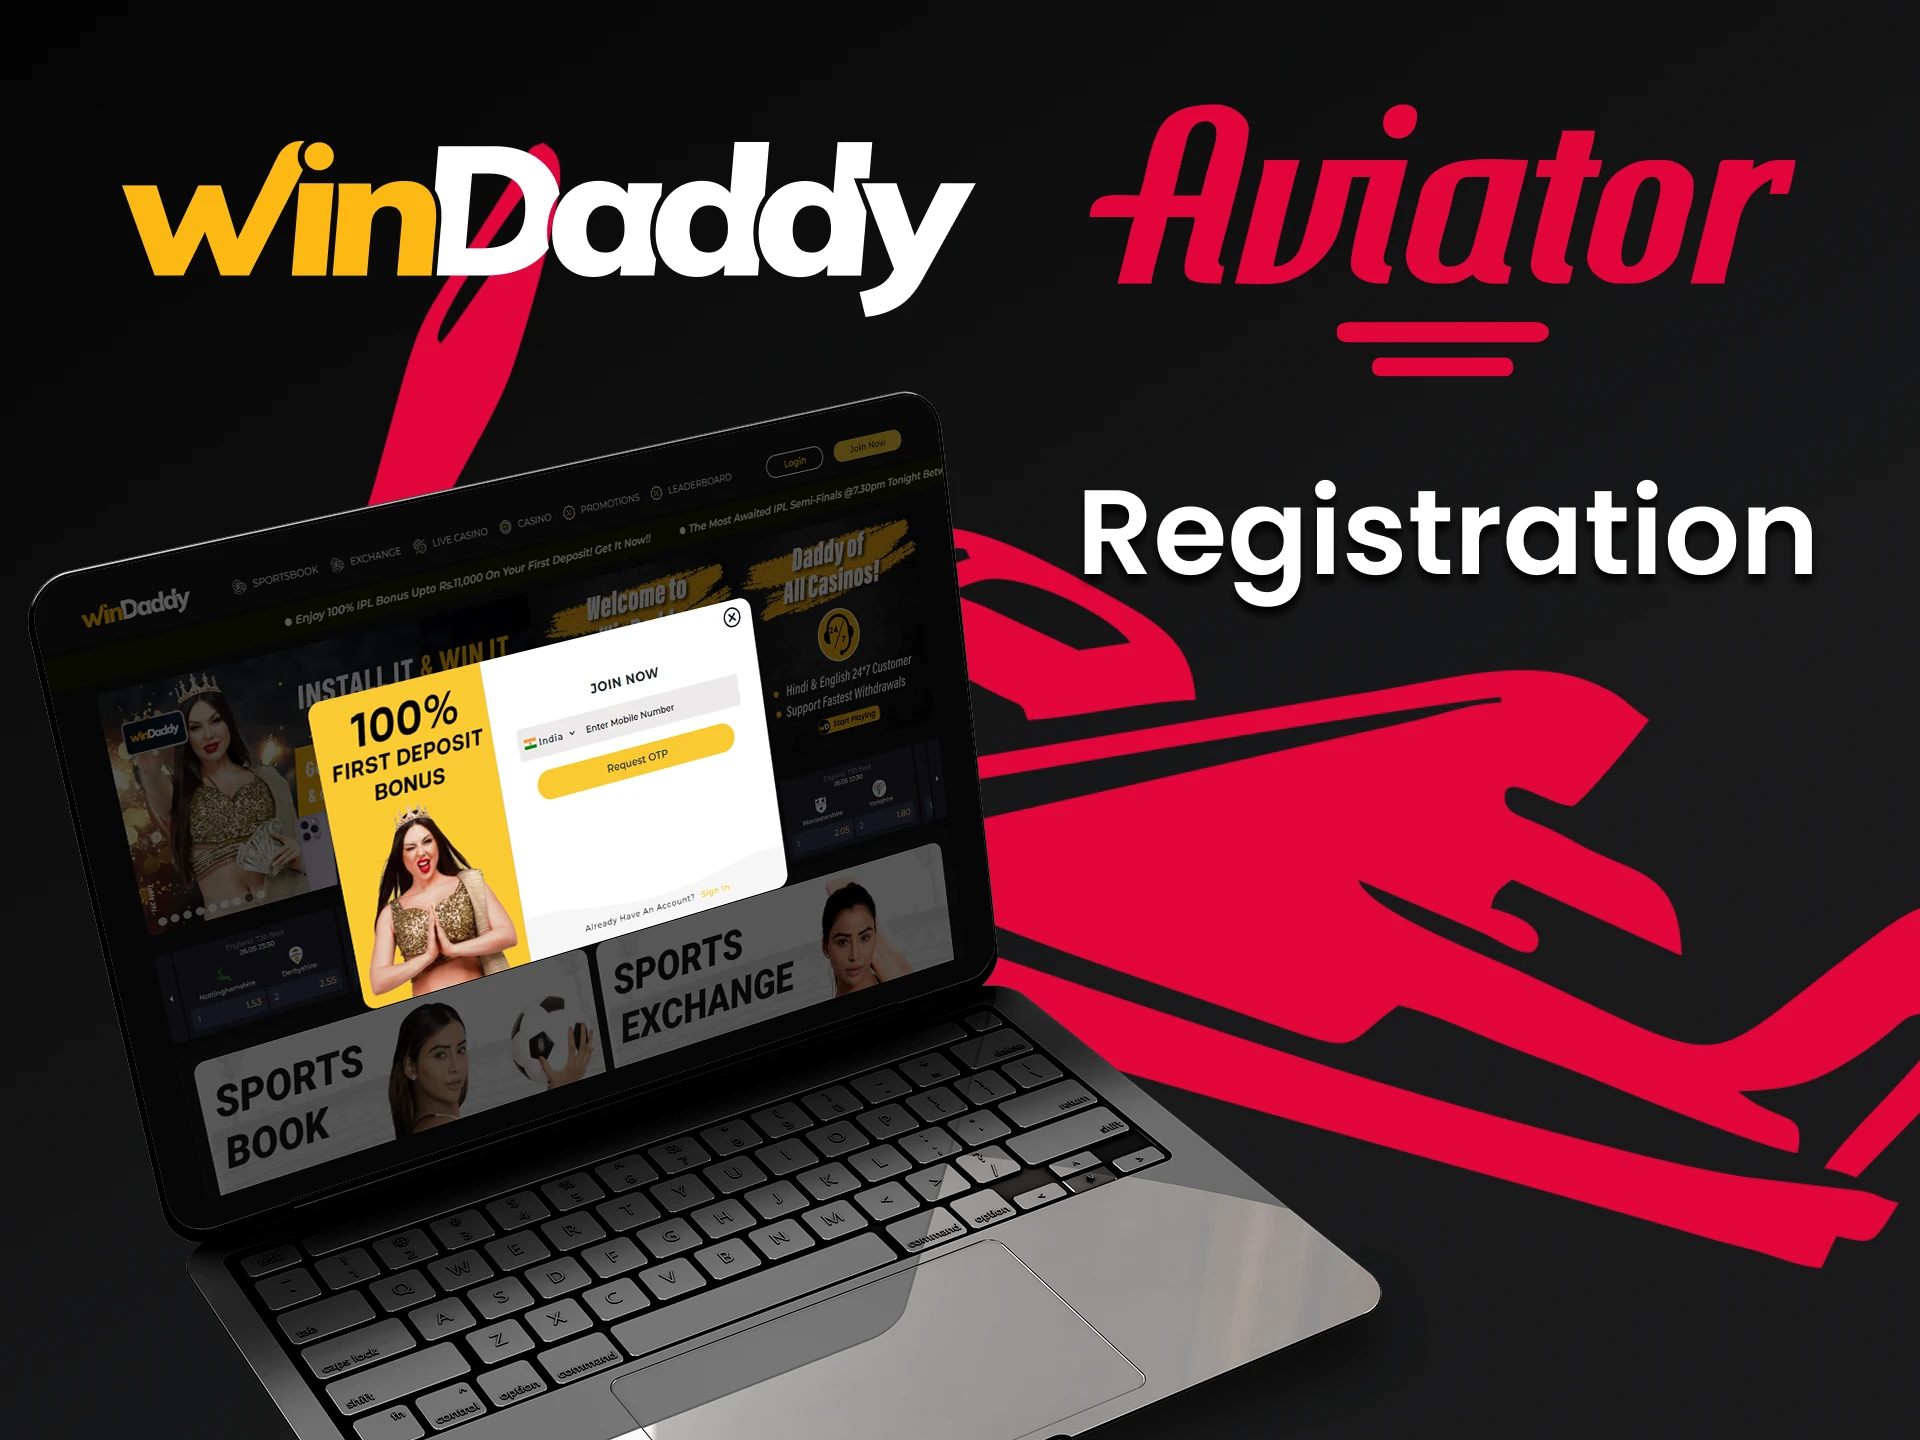 Create a WinDaddy account for Aviator.